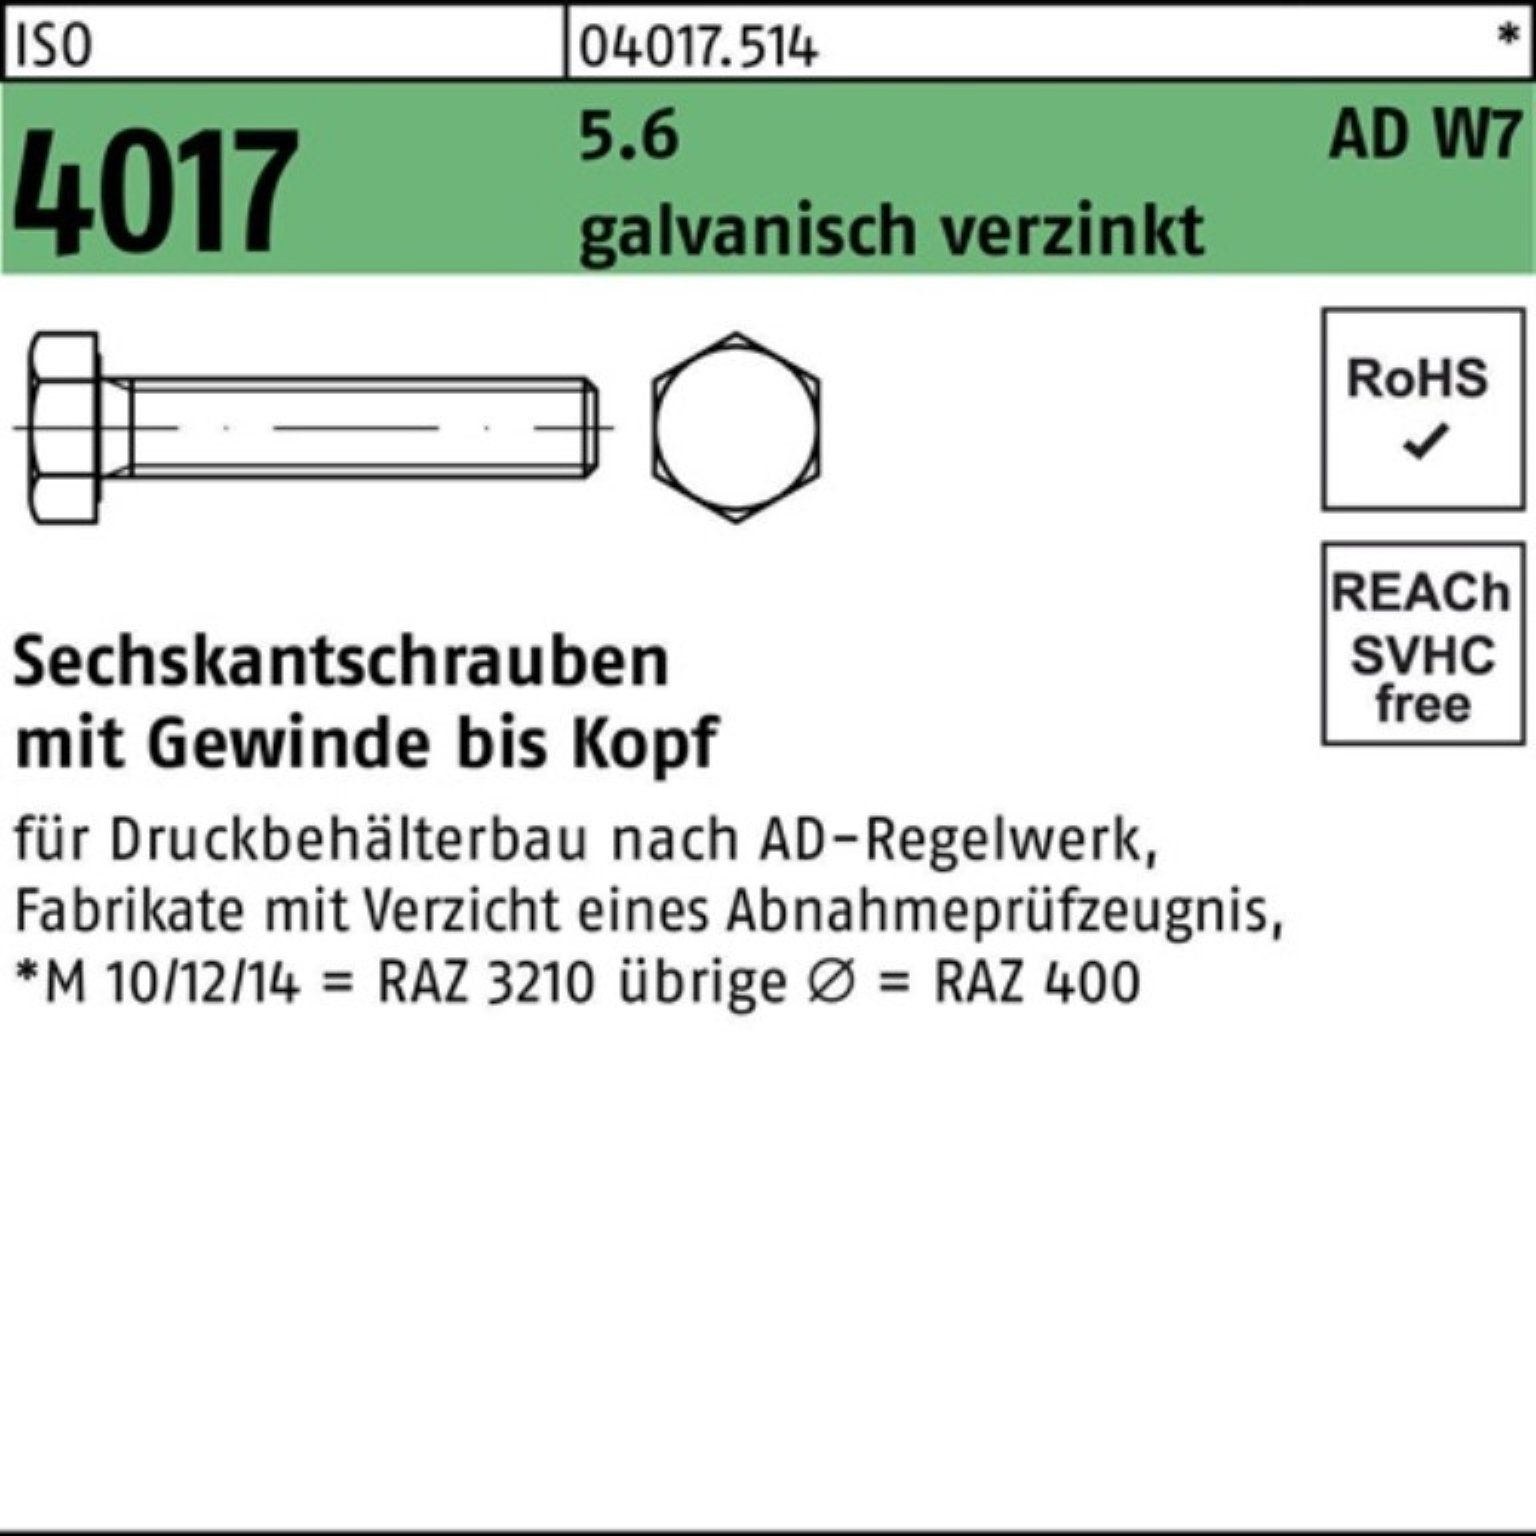 W7 AD 4017 Sechskantschraube 5.6 Pack Bufab VG 50 Sechskantschraube ISO galv.verz. M16x 100er